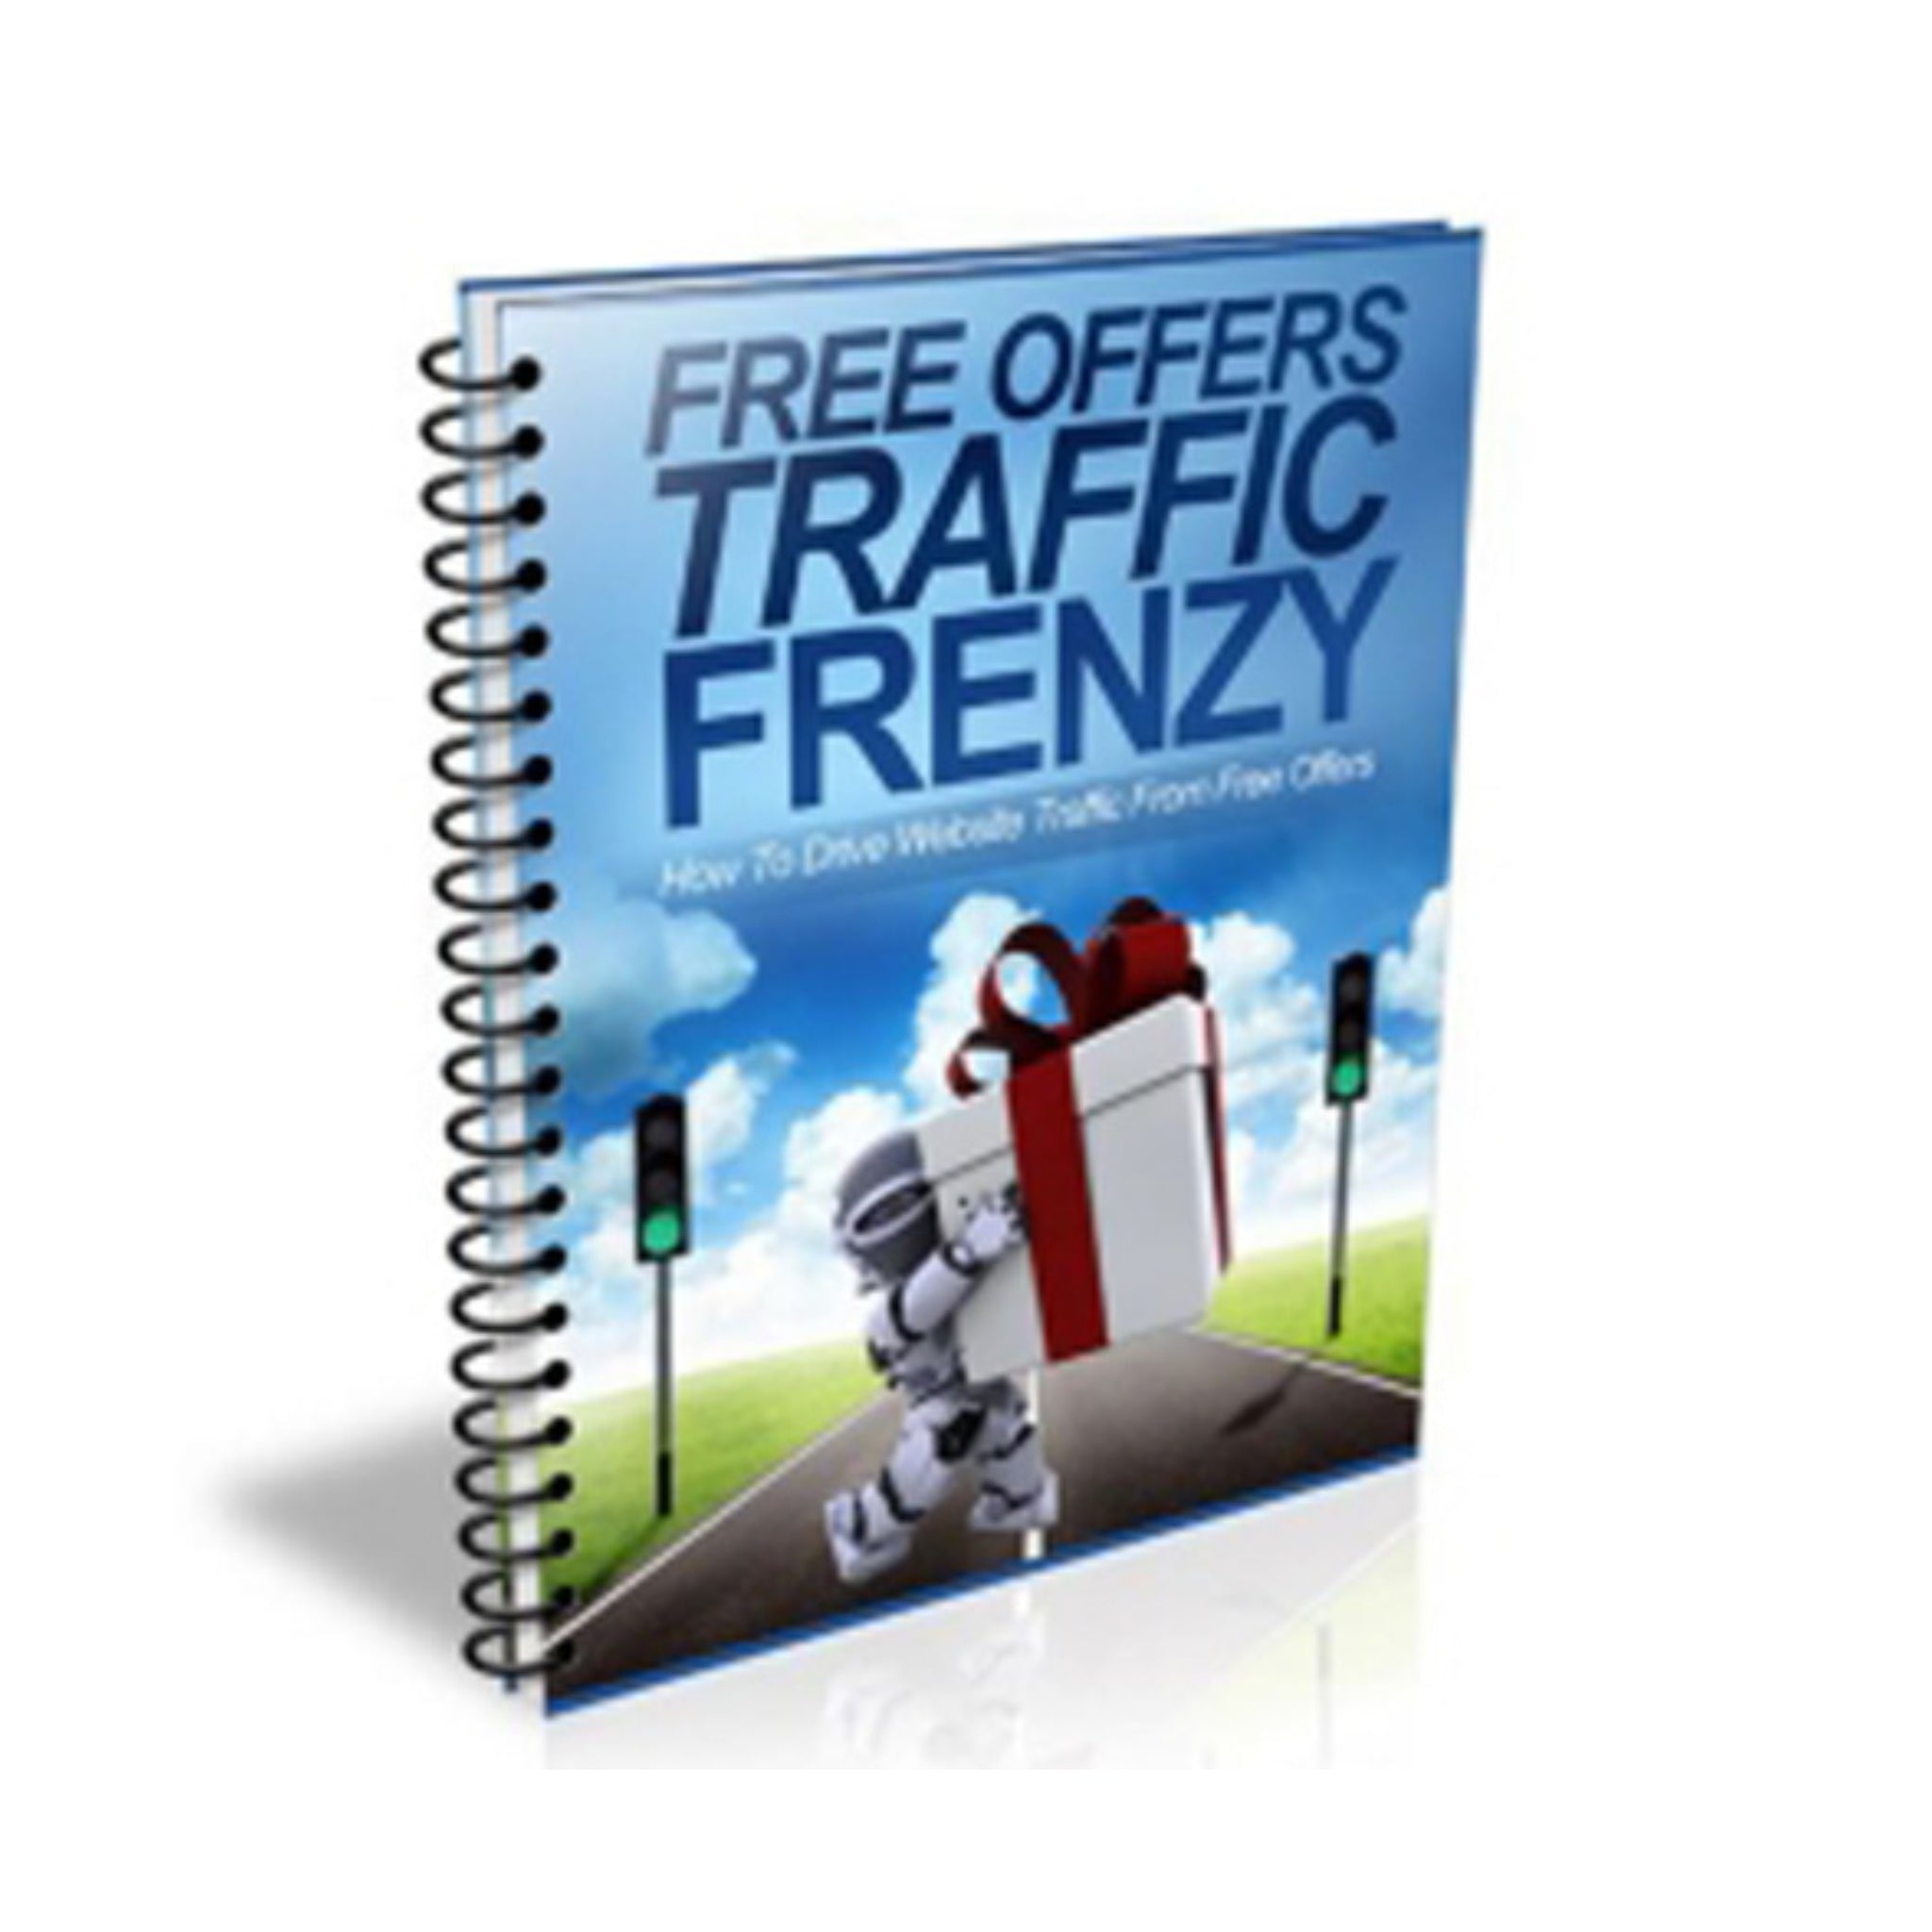 Free Offers Traffic Frenzy Ebook